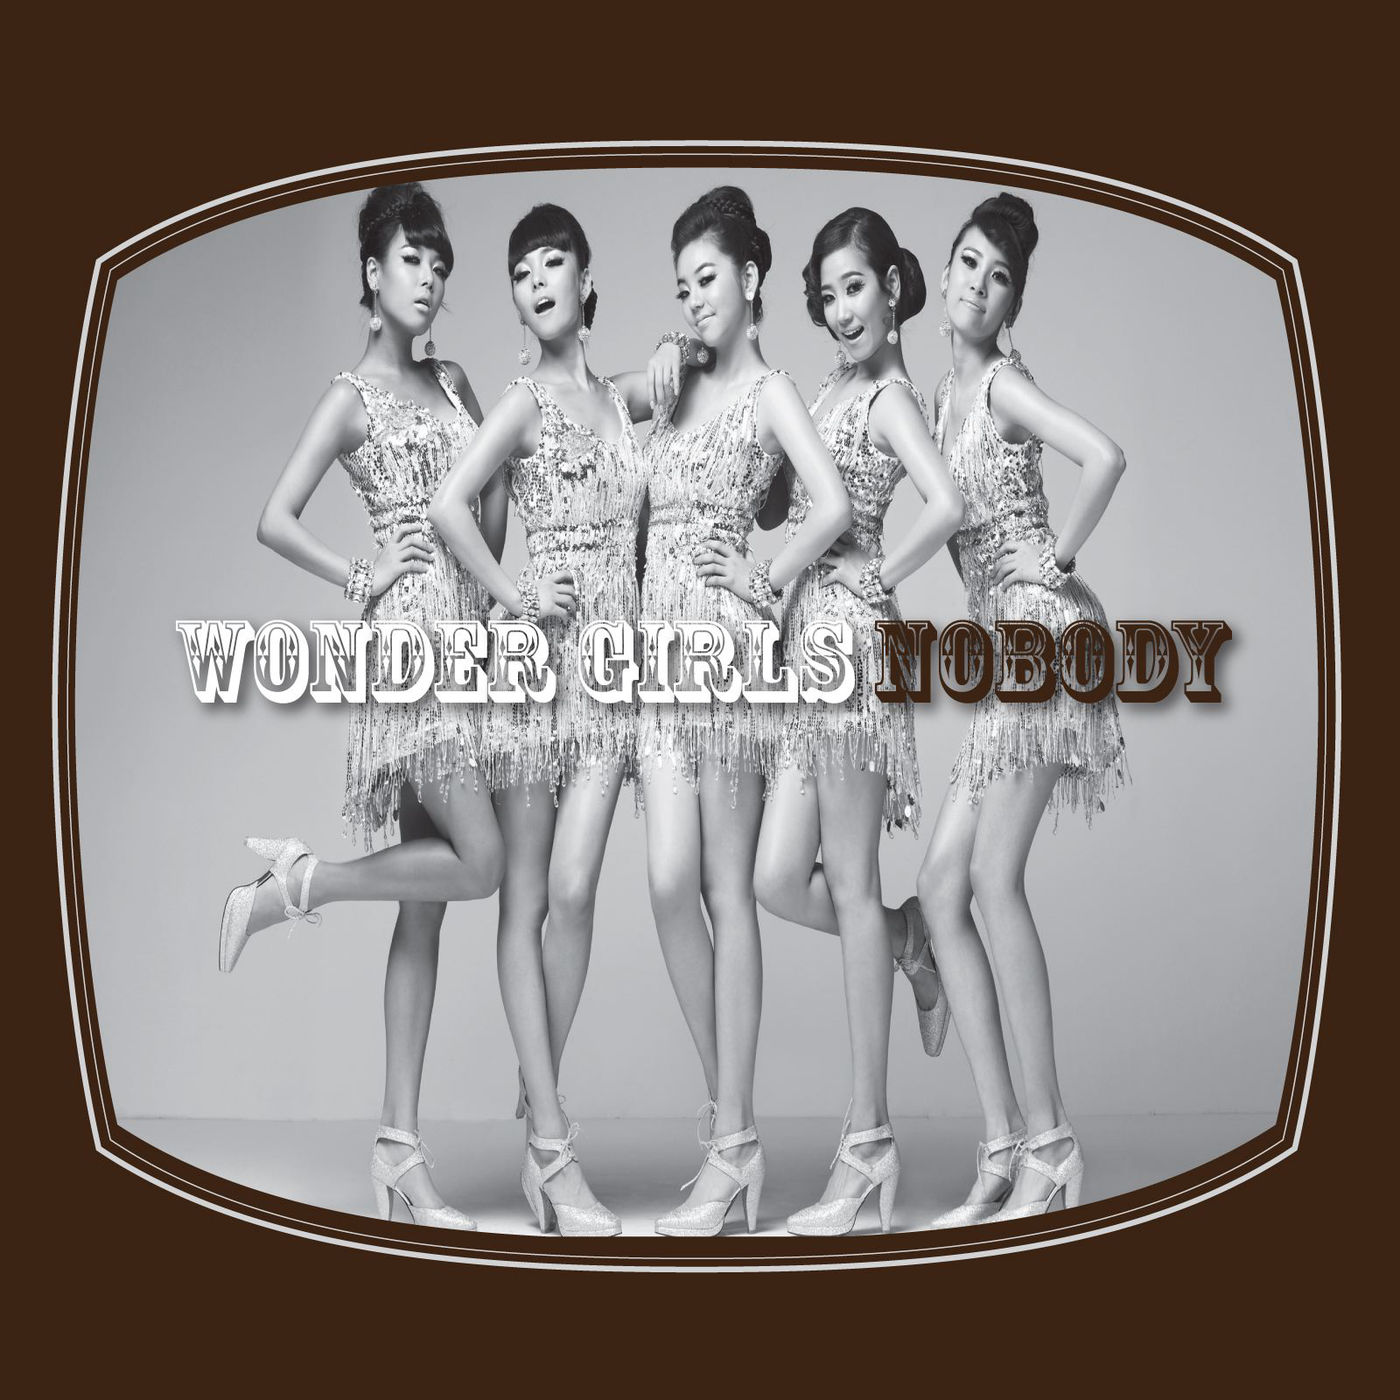 Nobody (Wonder Girls song) - Wikipedia